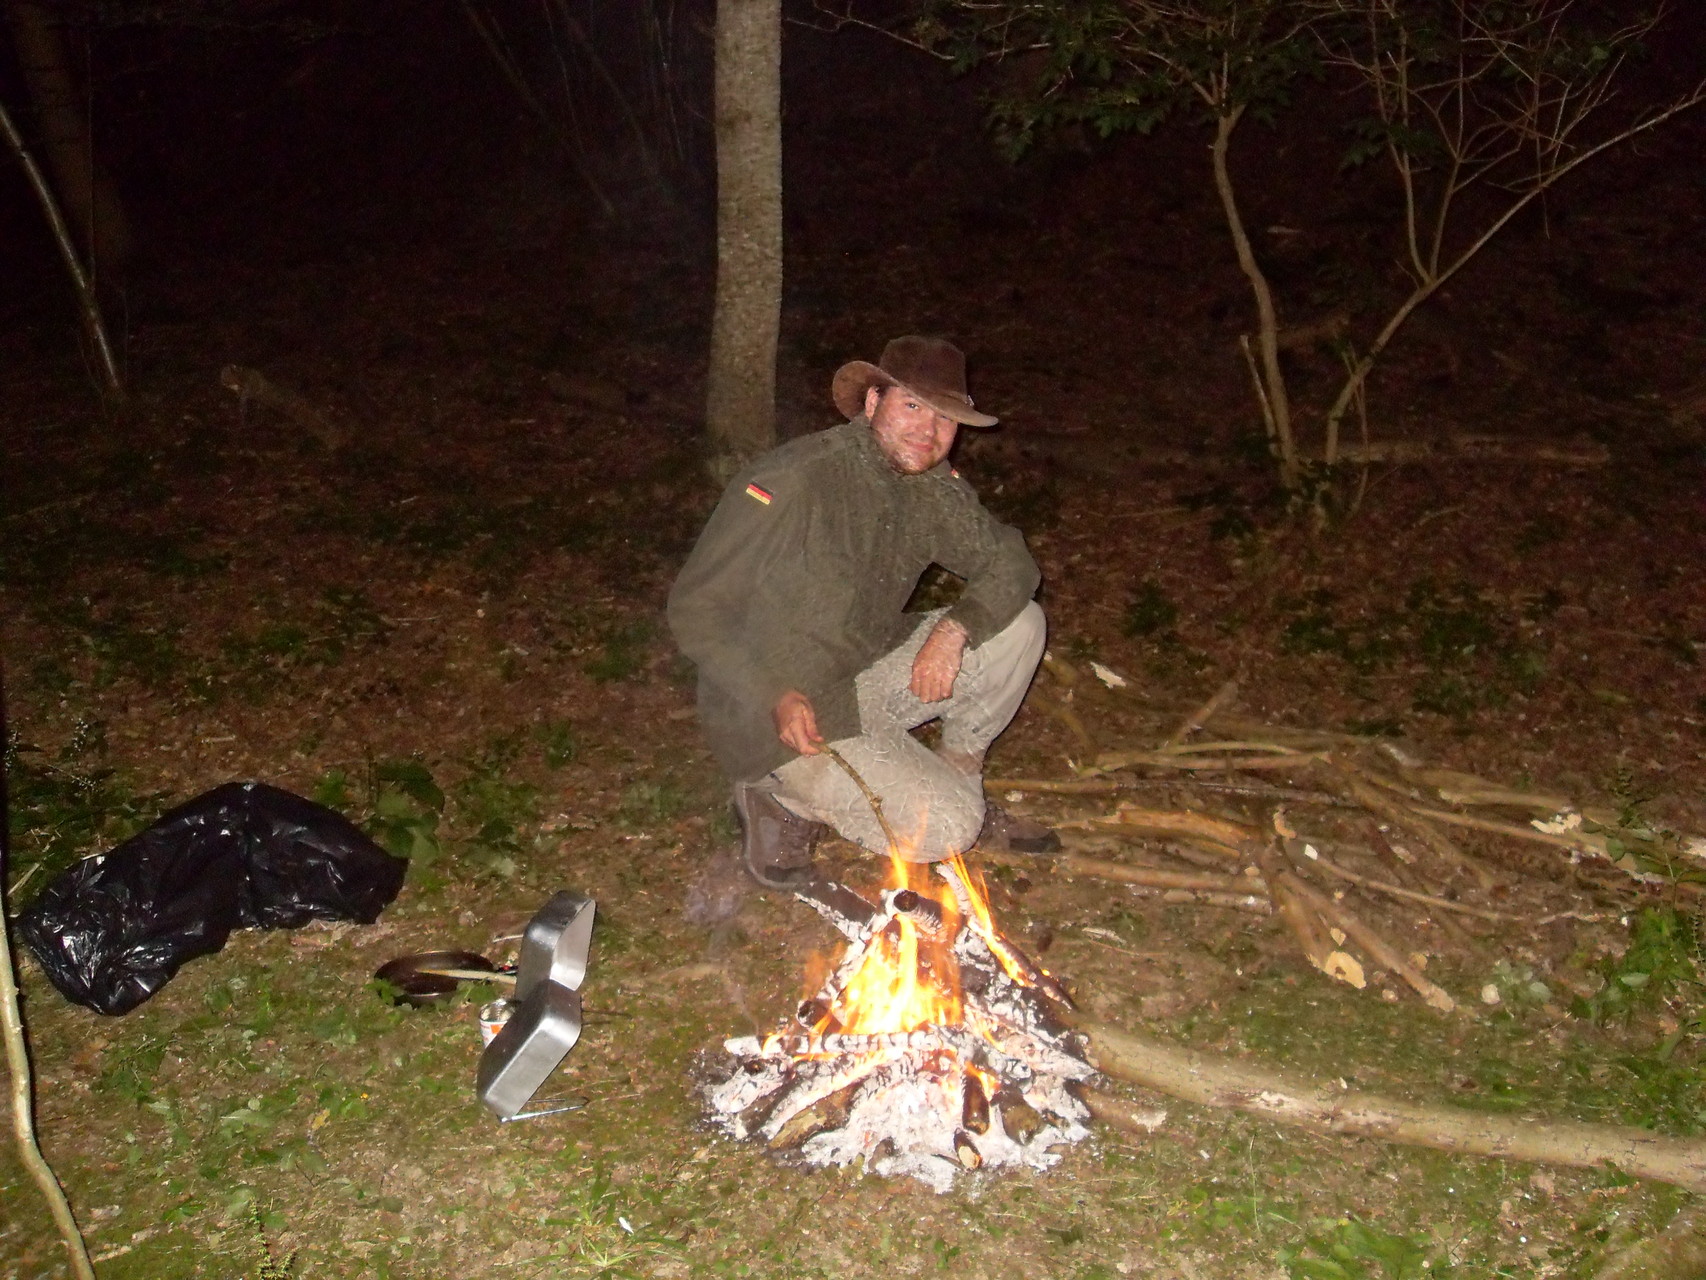 Larry enjoying the fire like a man